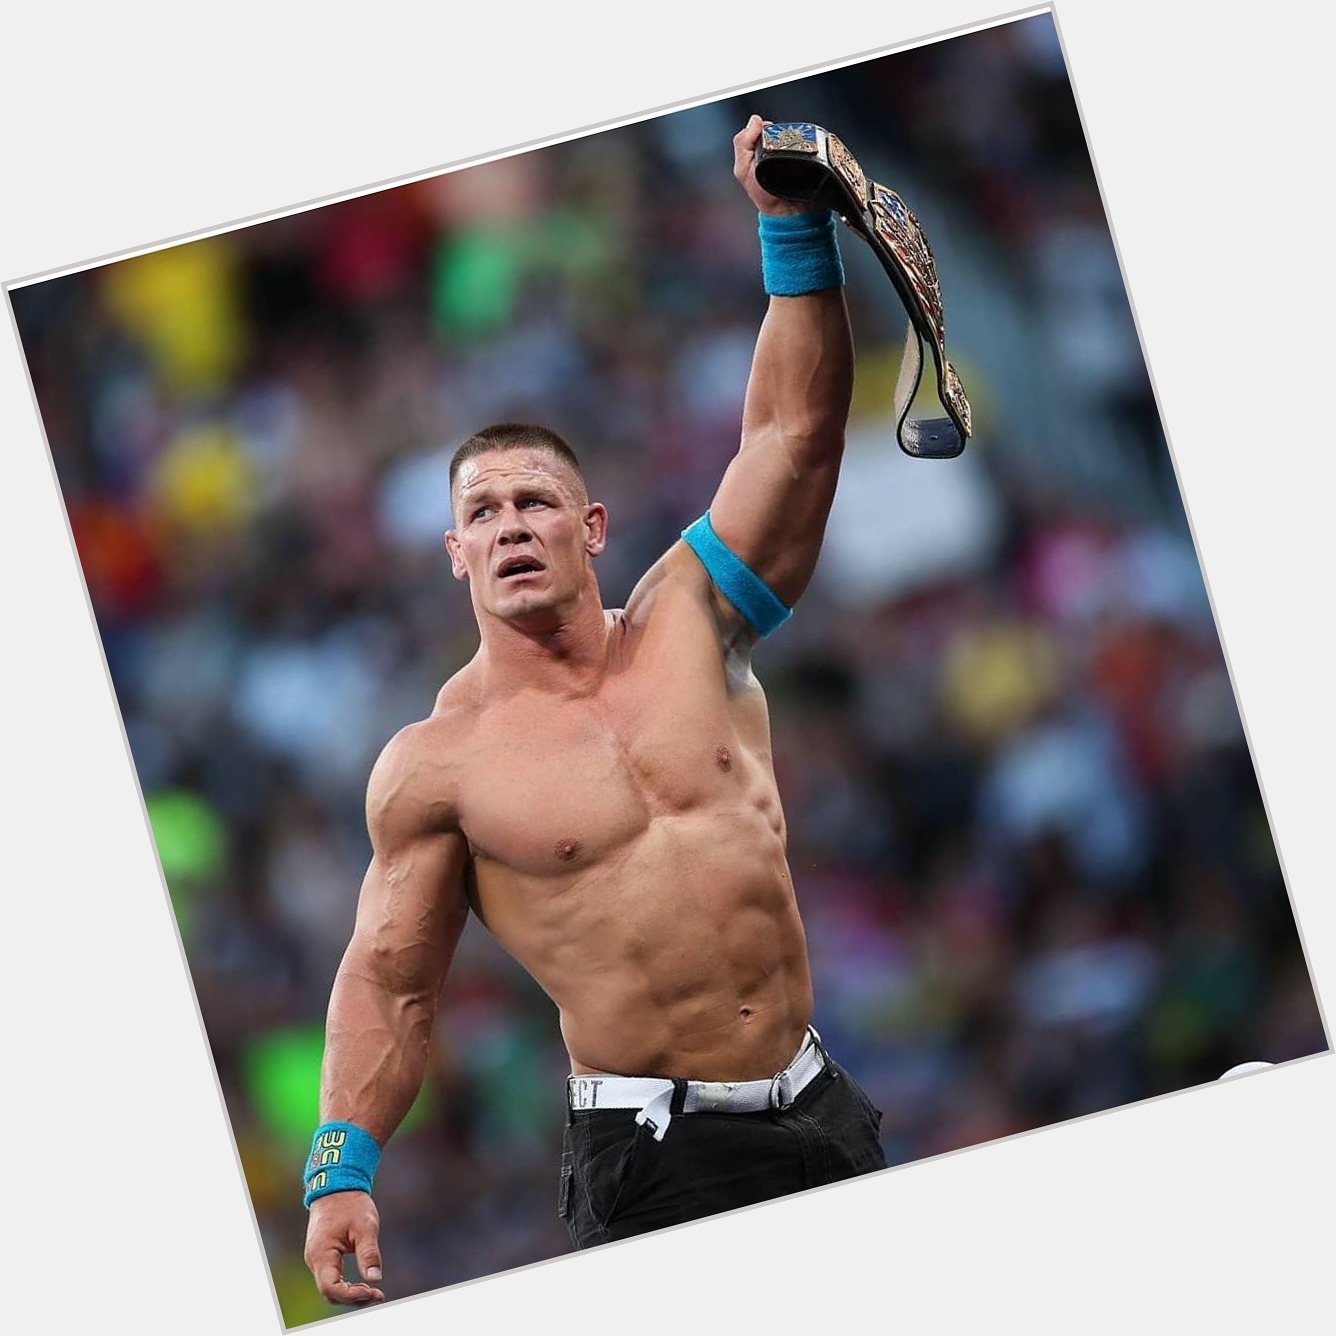 Happy birthday to professional wrestler, actor and TV host John Cena. 